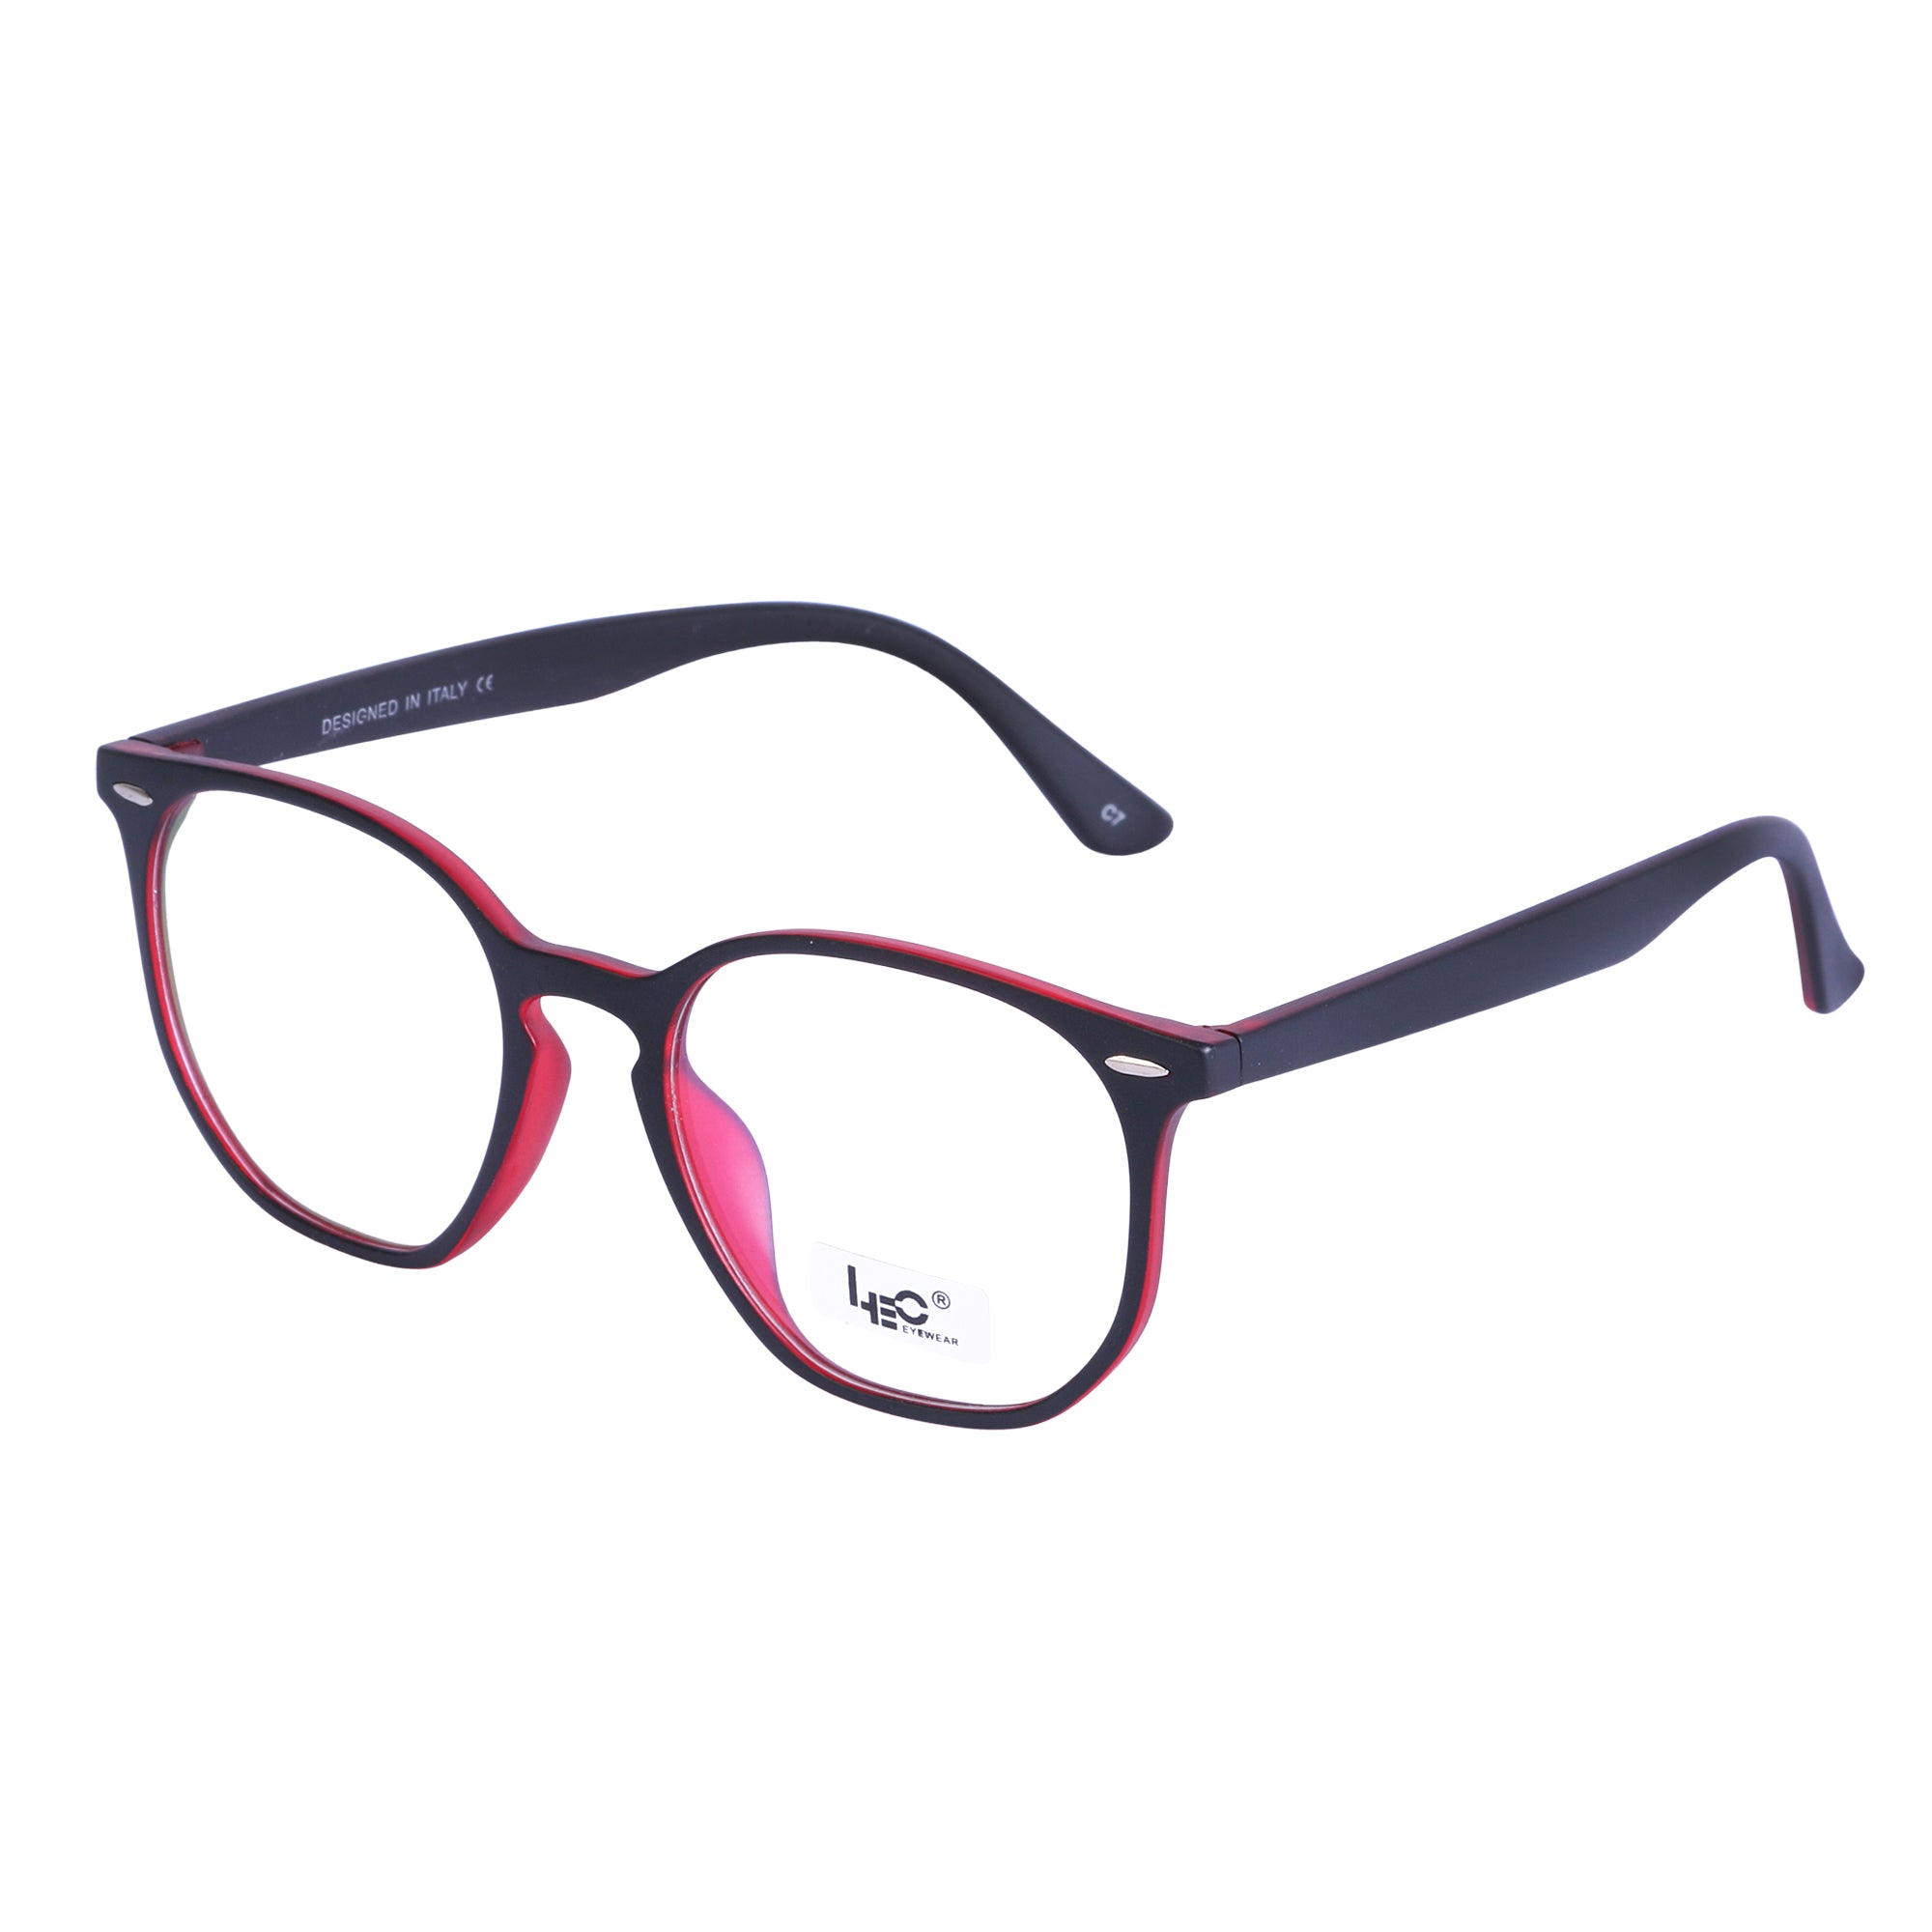 Black & Red Hexagon Rimmed Eyeglasses - L106-C7